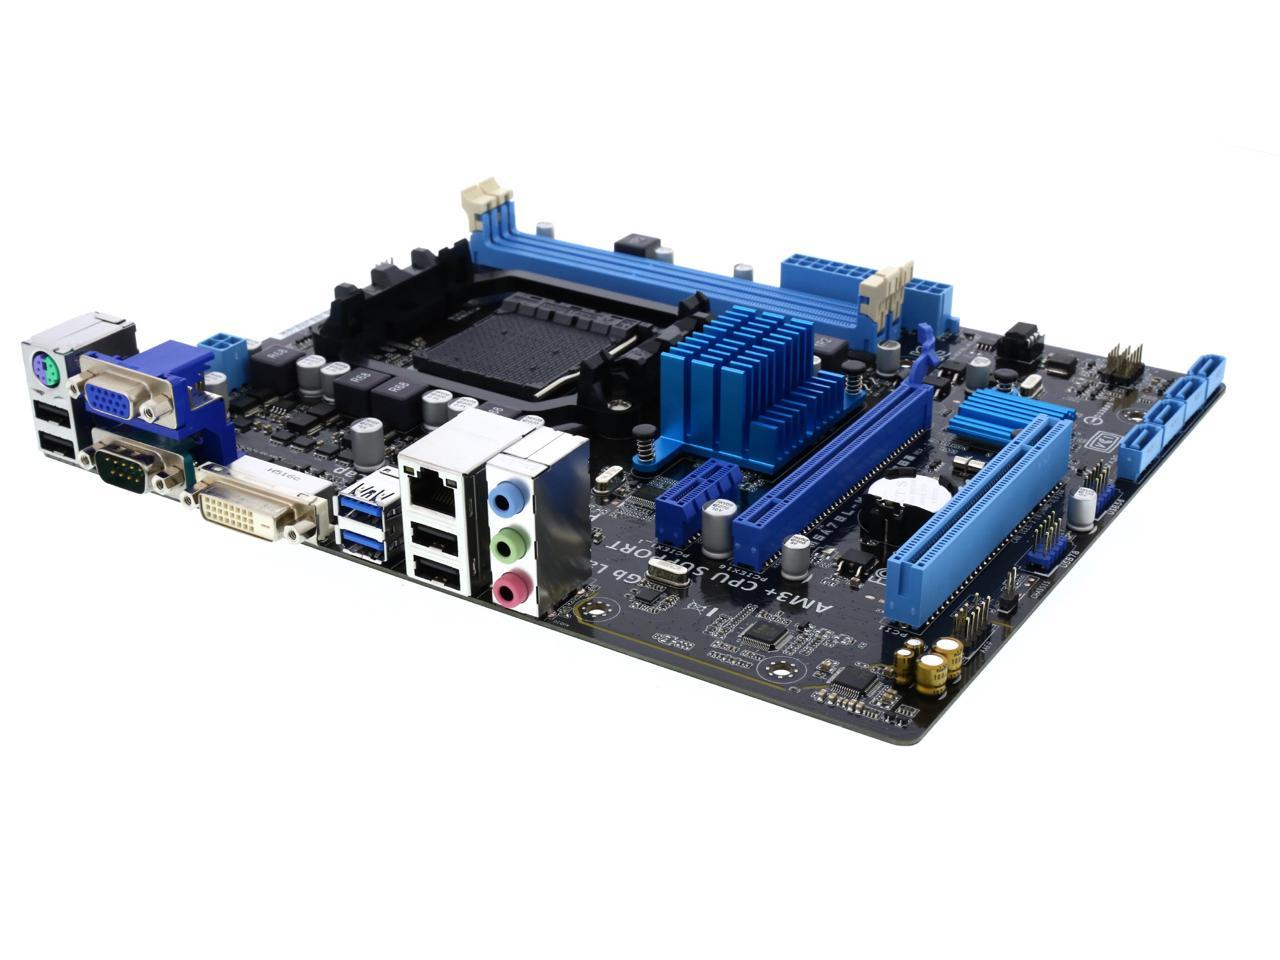 ASUS M5A78L-M LE/USB3 AM3+ Micro ATX AMD Motherboard - Newegg.com